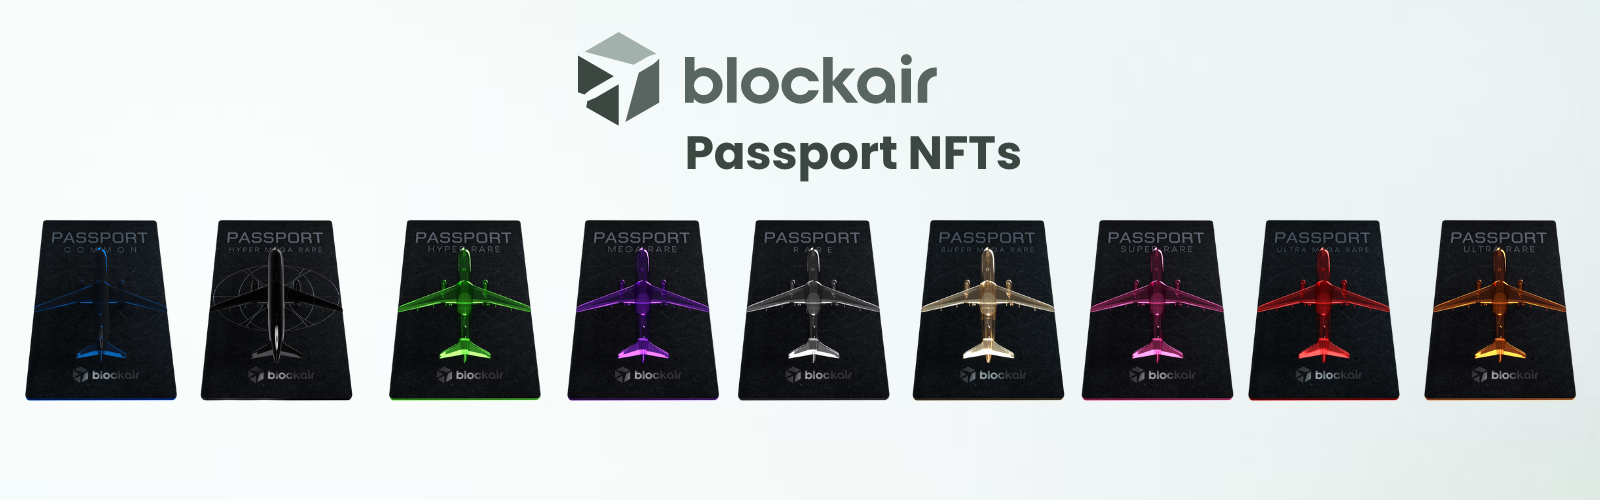 BlockAir Passport NFT